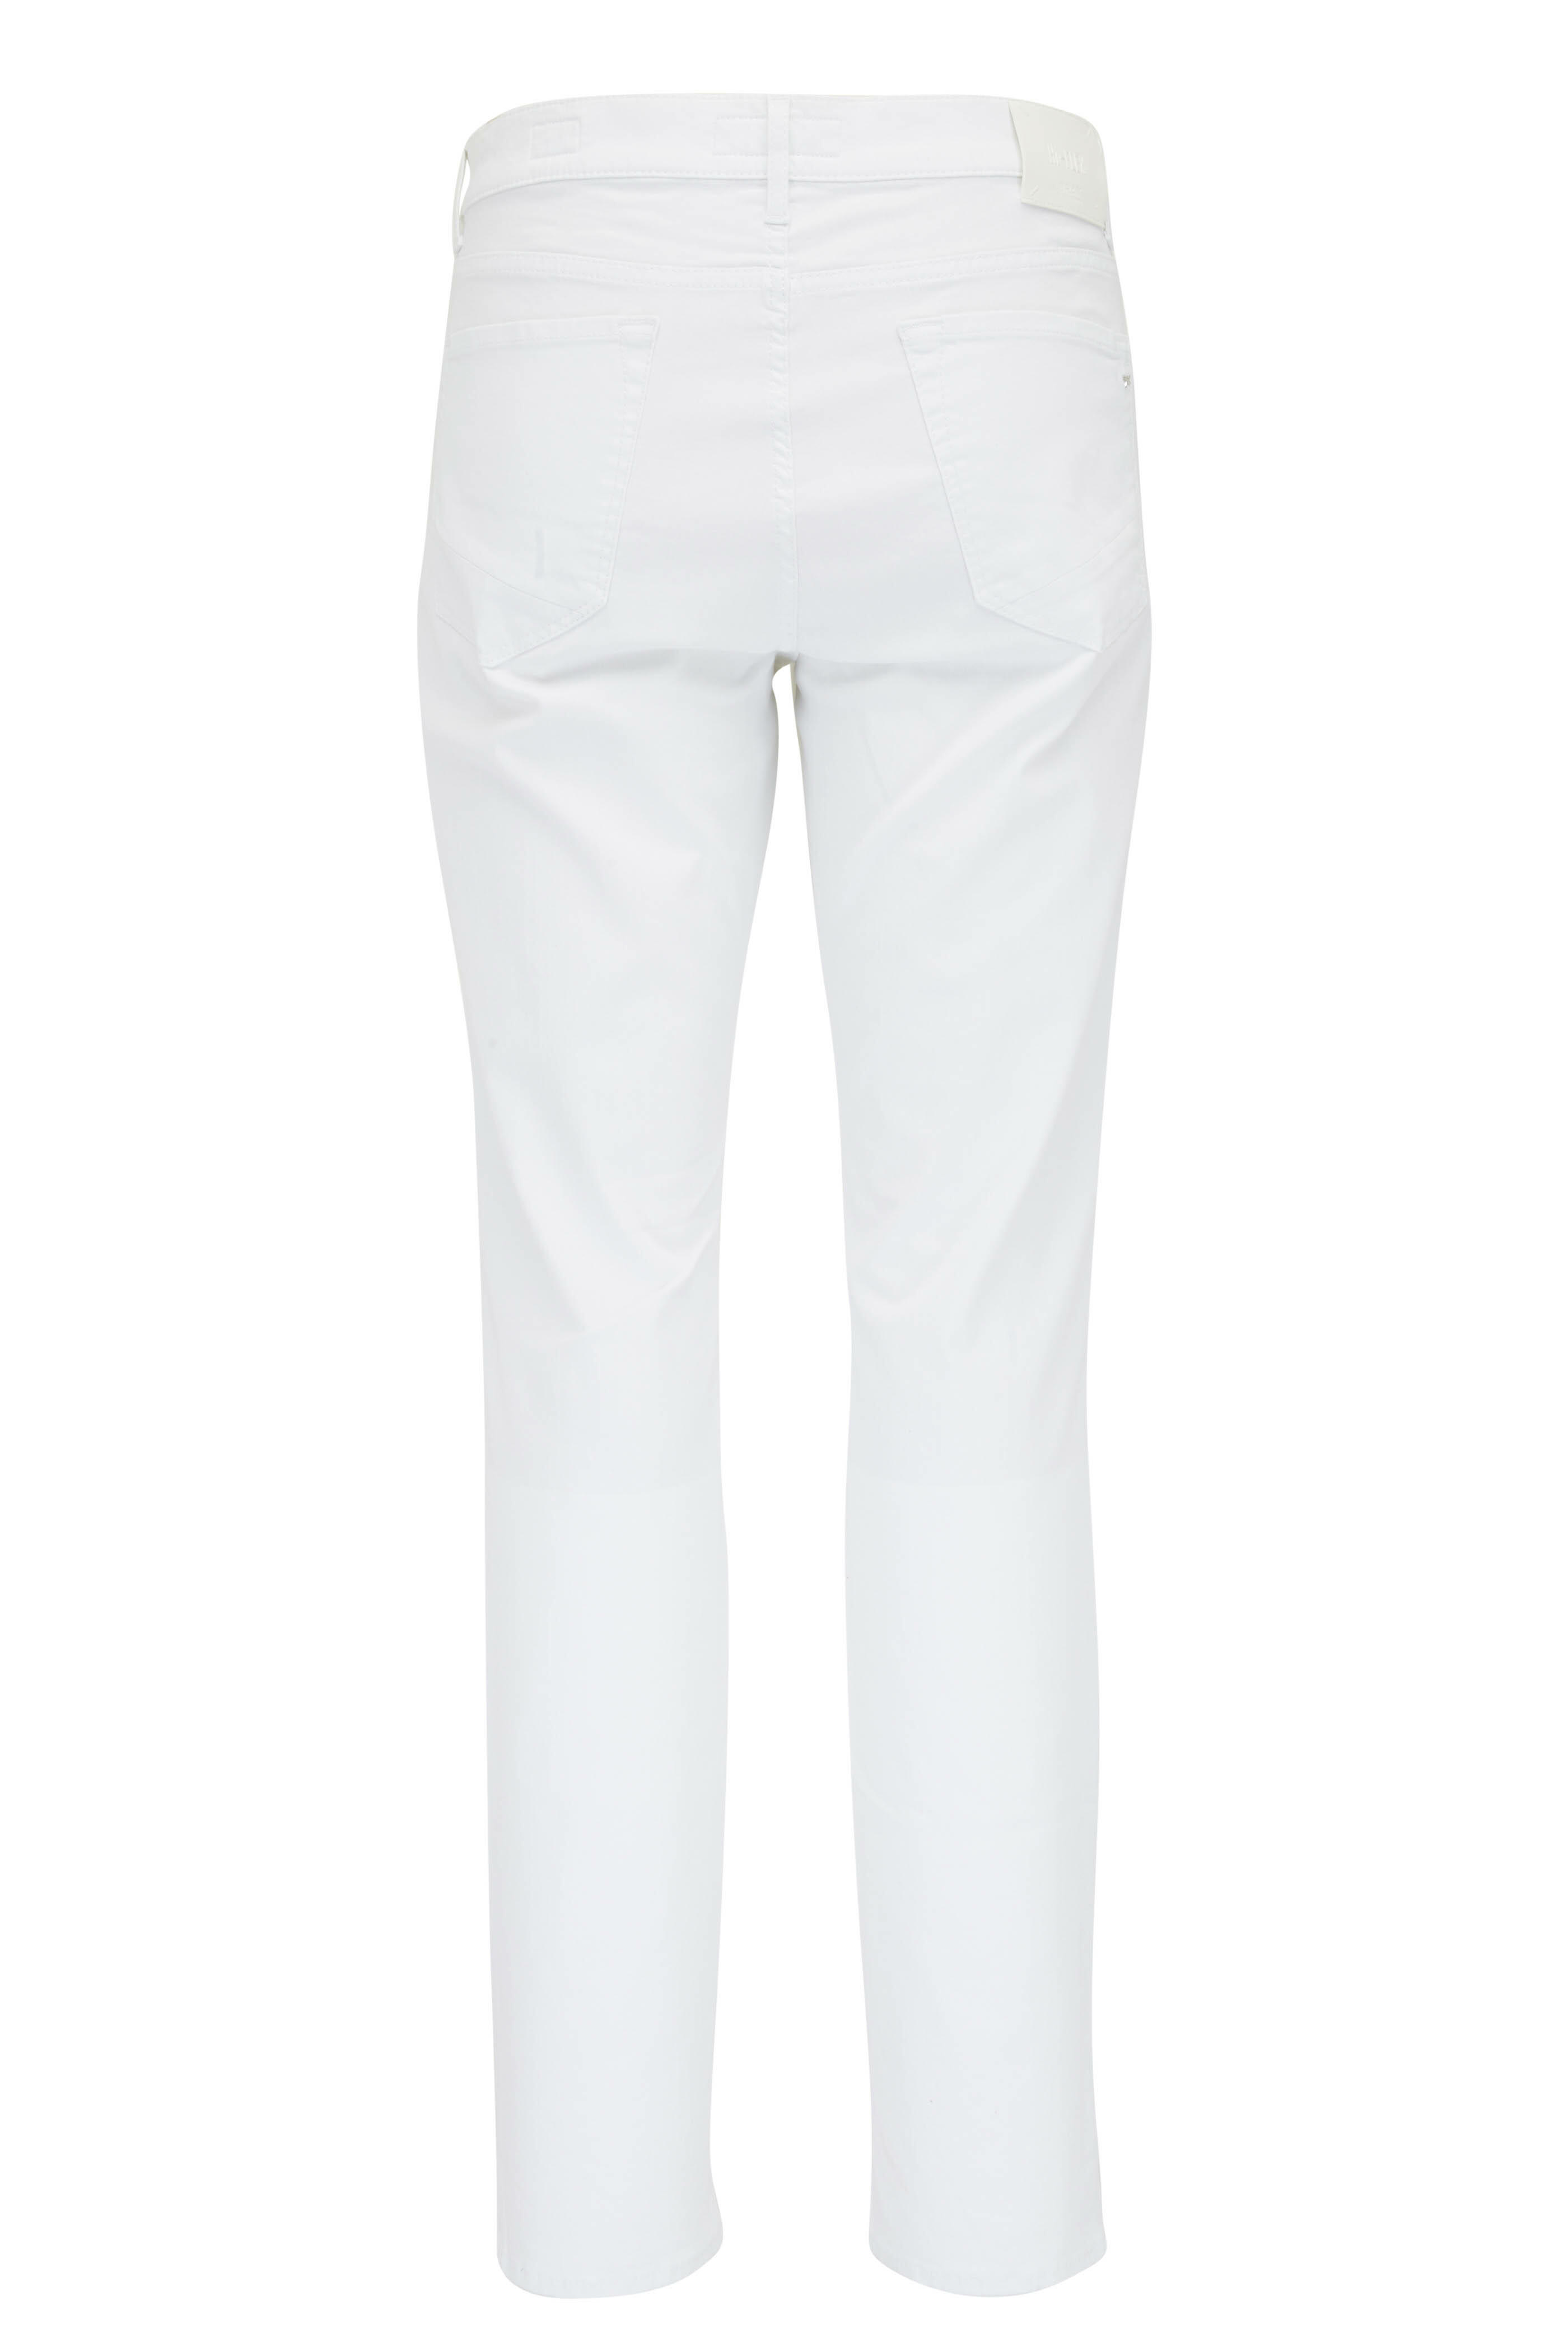 Brax - White Hi-Flex Five Pocket Jean | Mitchell Stores